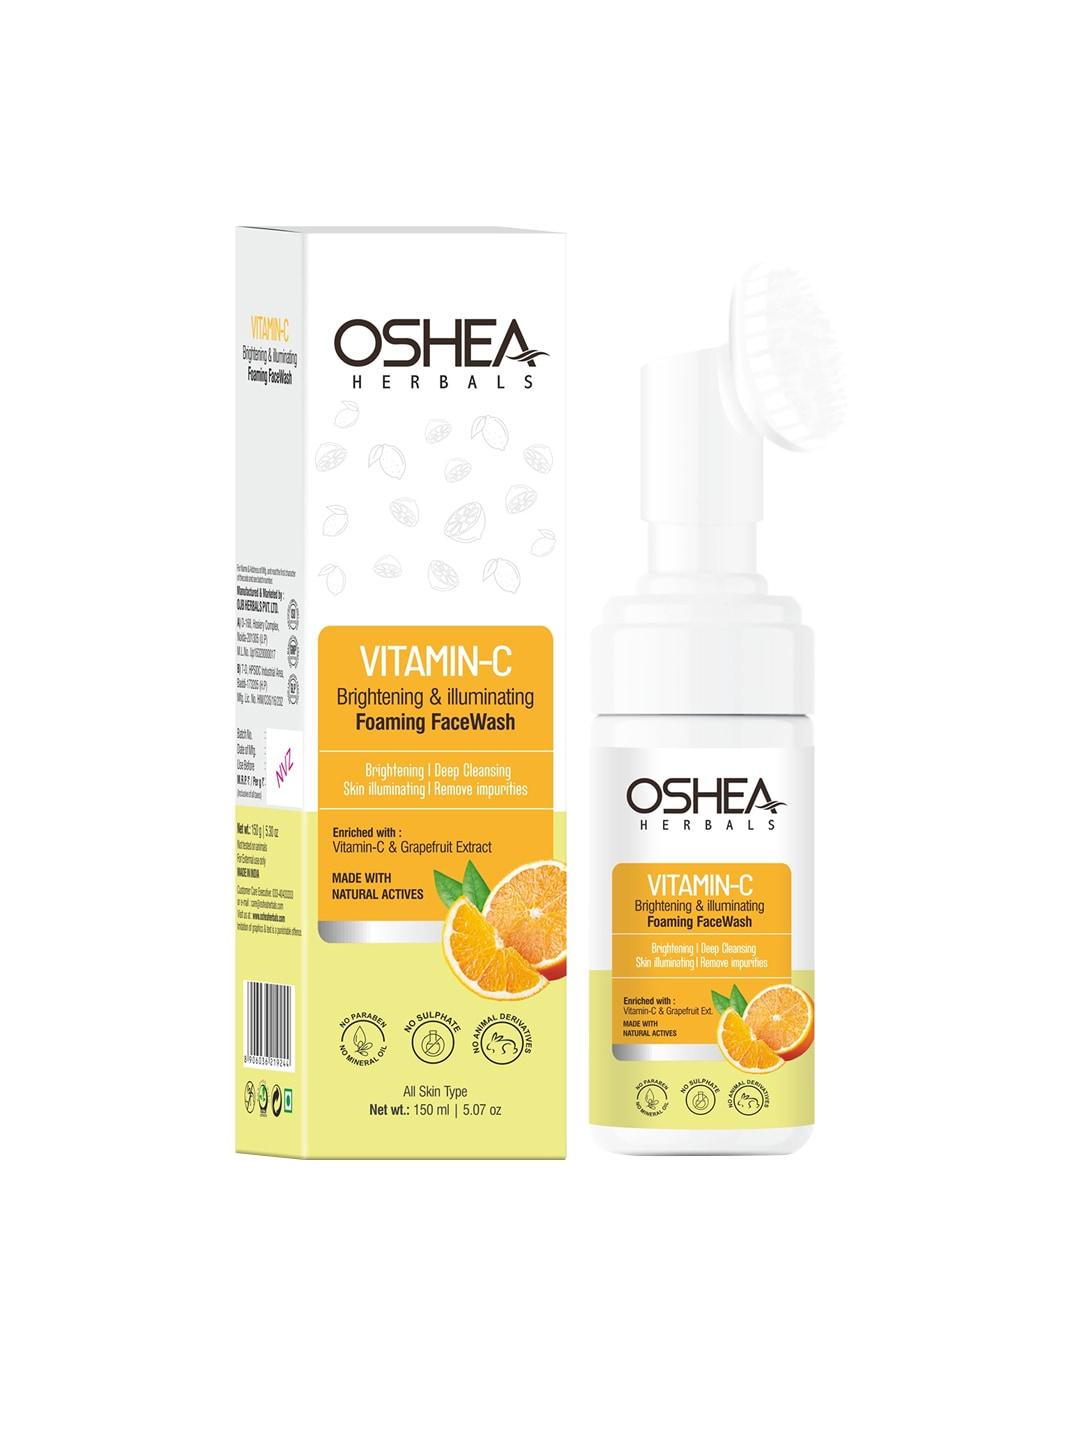 oshea herbals vitamin c foaming face wash 150ml